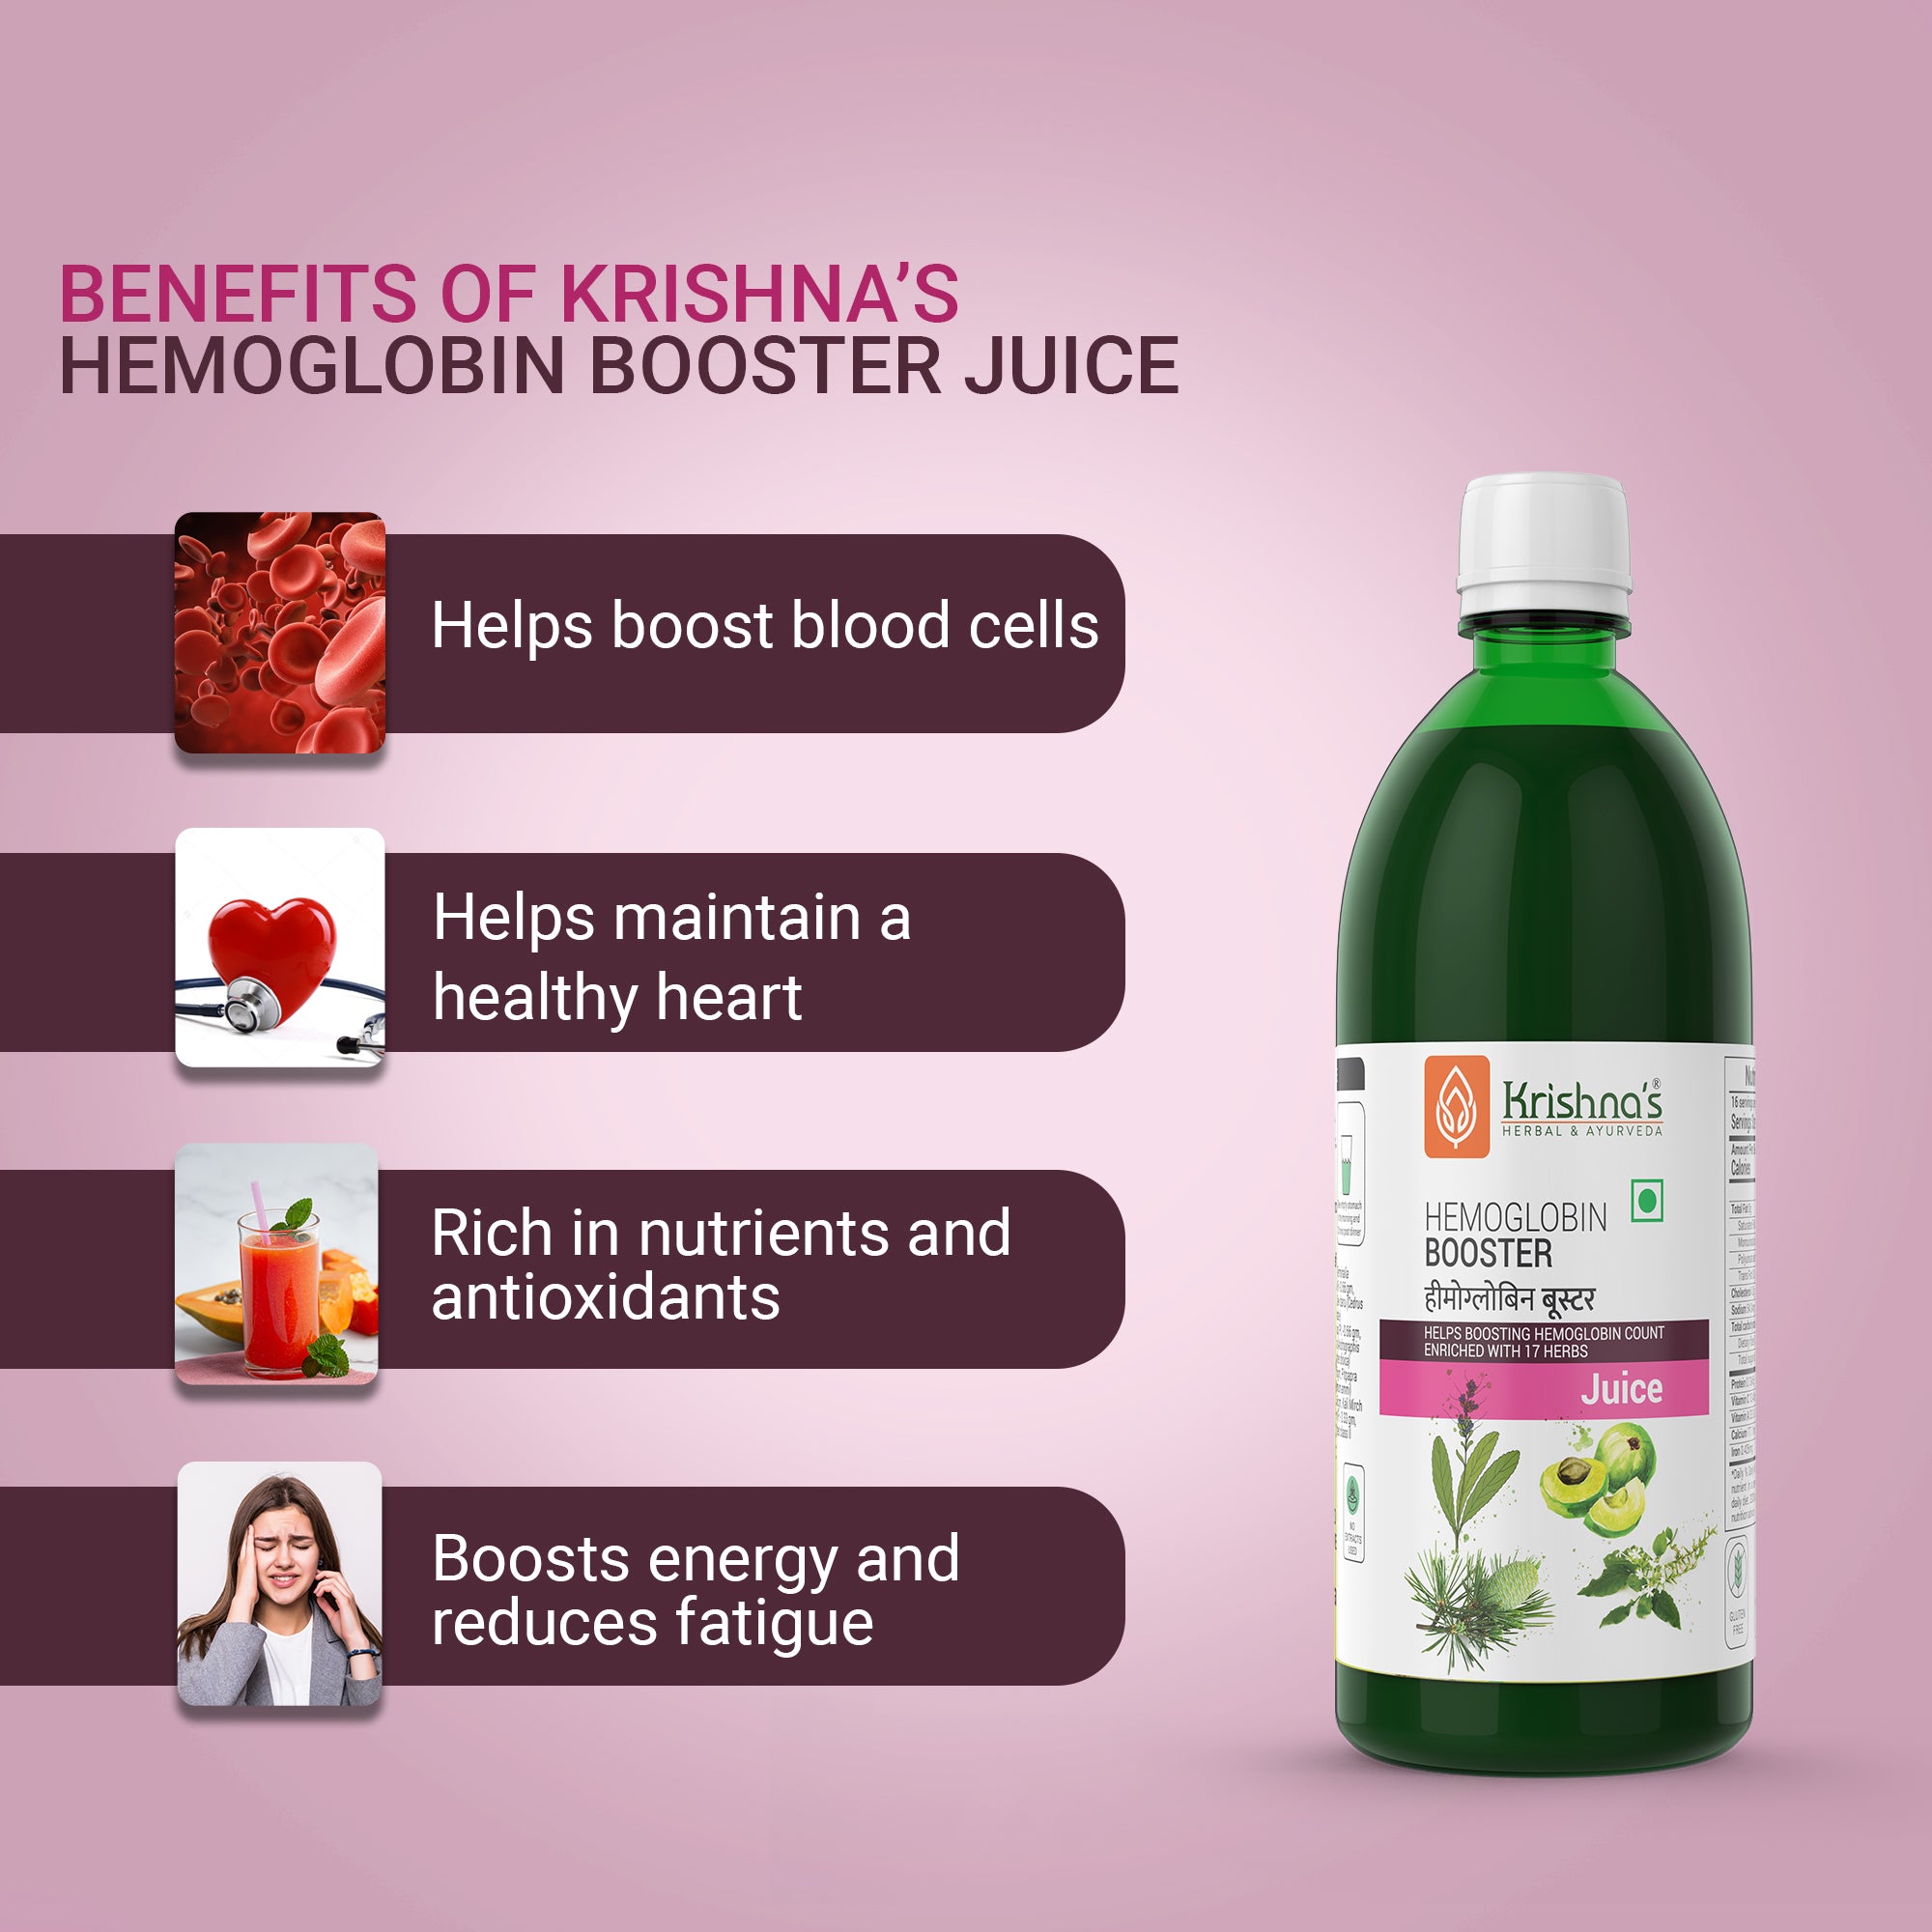 Hemoglobin Booster Juice Benefits